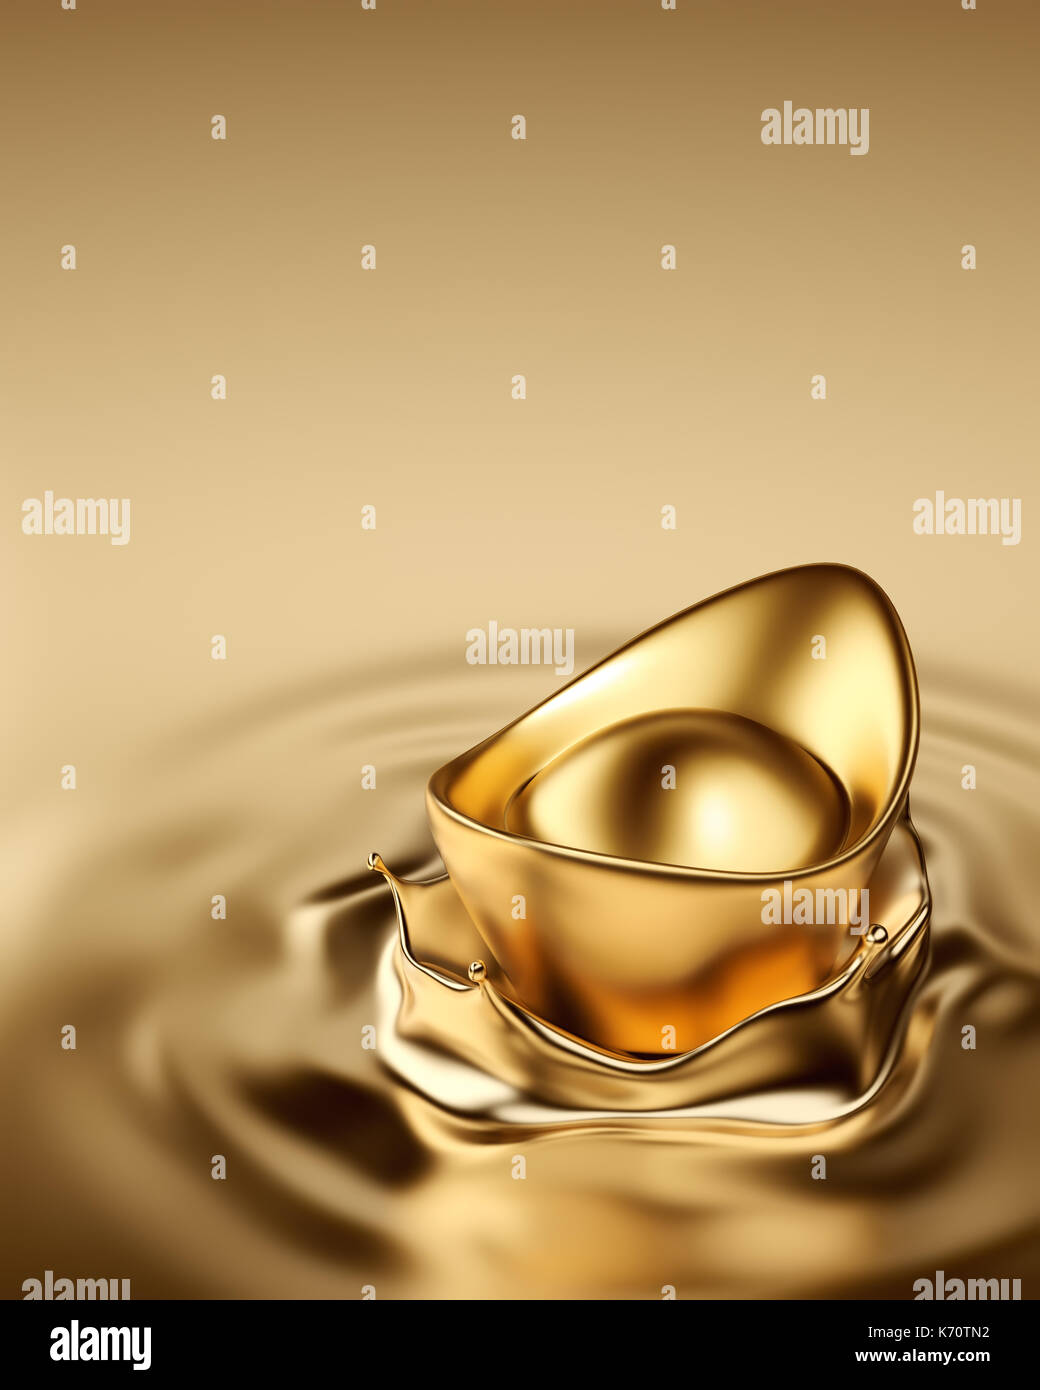 Gold Sycee (Yuanbao) drop on liquid gold Stock Photo